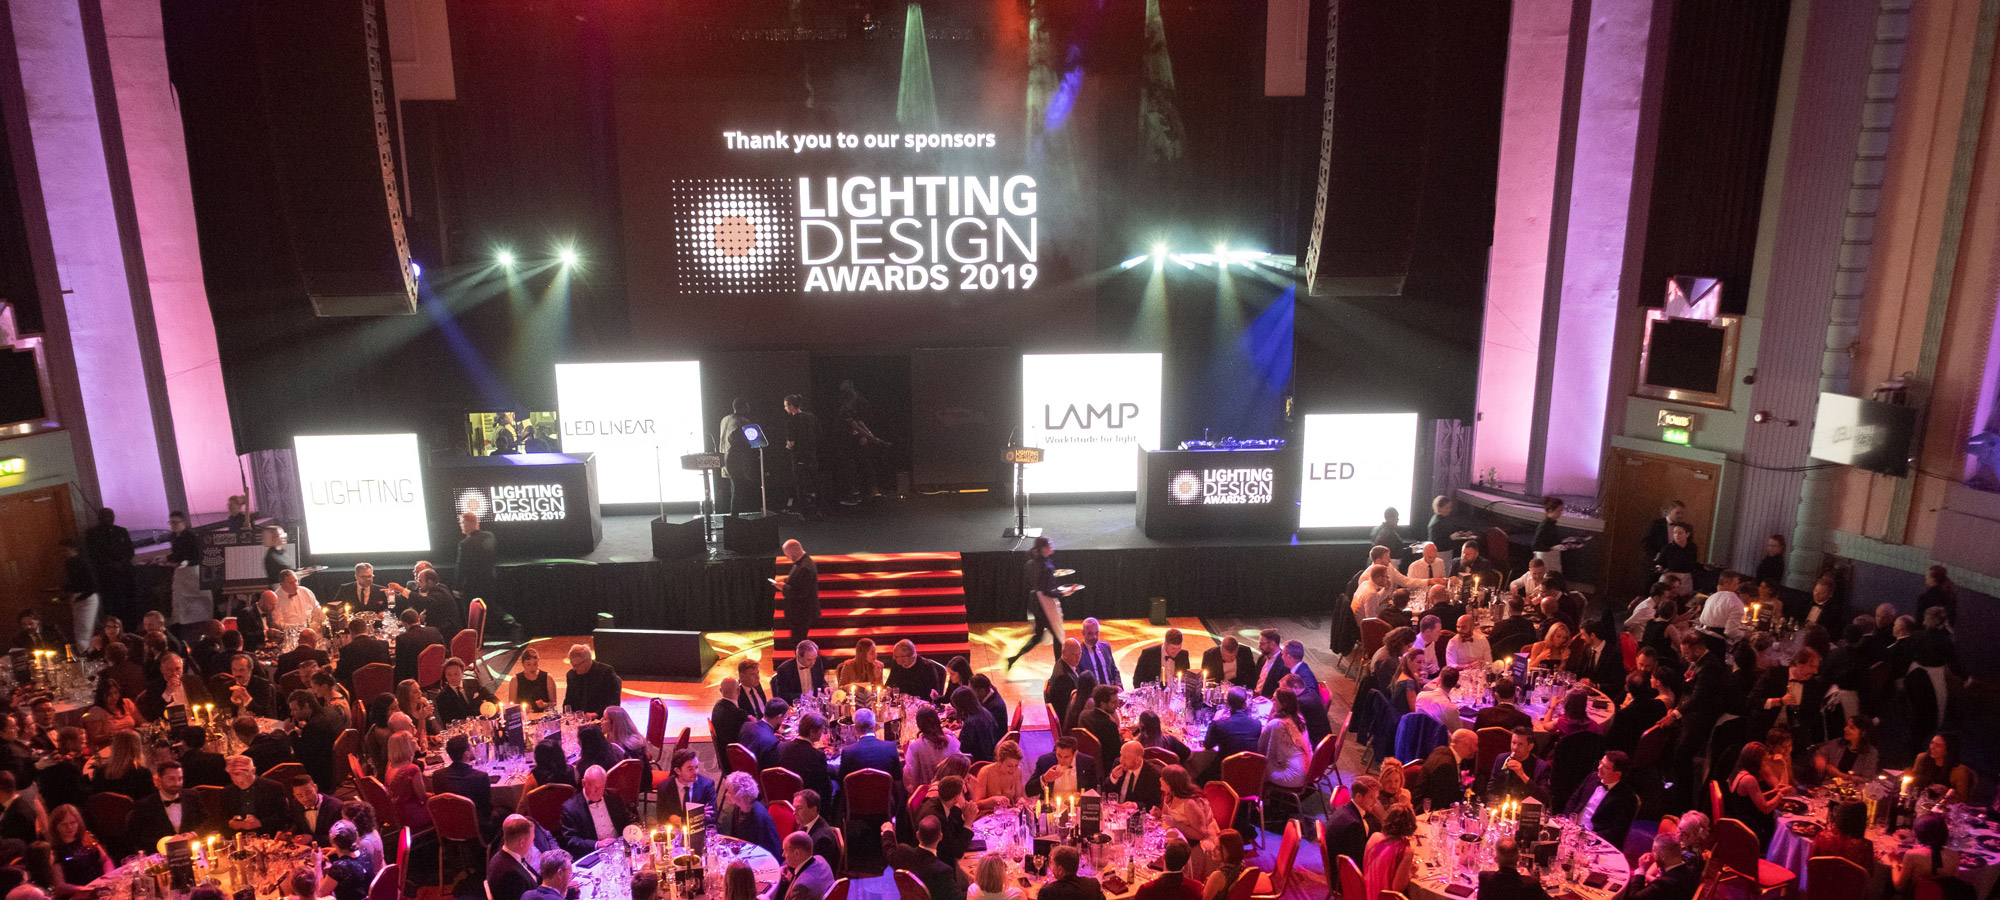 Lighting Design Awards 2019